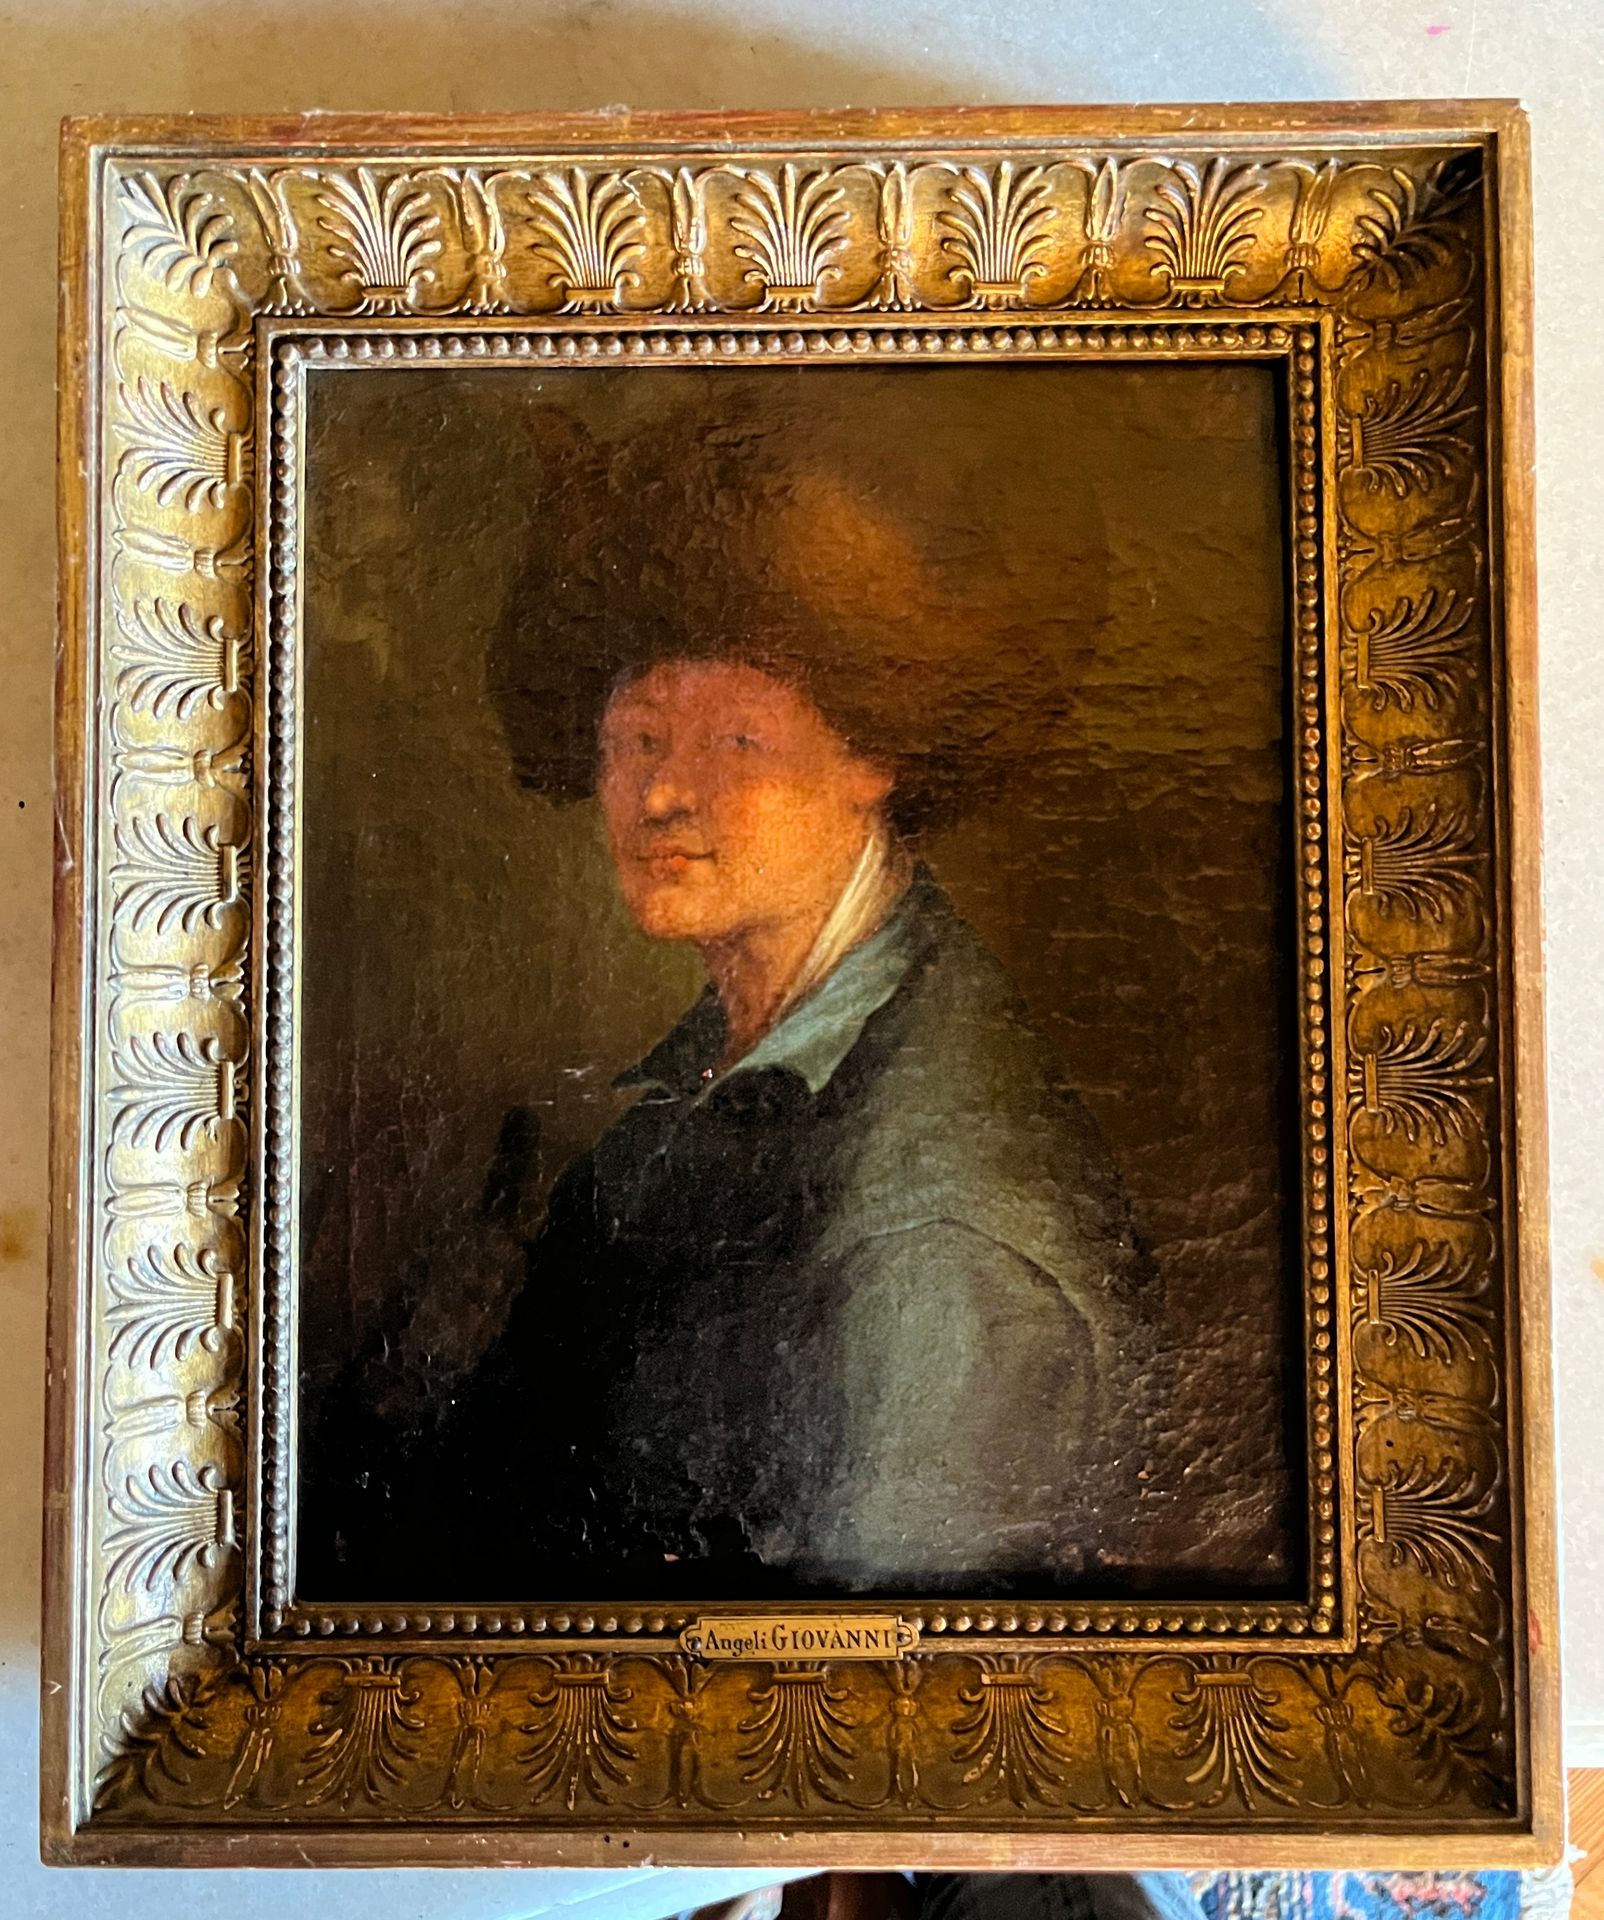 Null 65 Angeli GIOVANNI (?)

一个戴帽子的人的画像

布面油画

高27厘米，宽22厘米。

以棕榈树为框架，有天启式的卡特尔